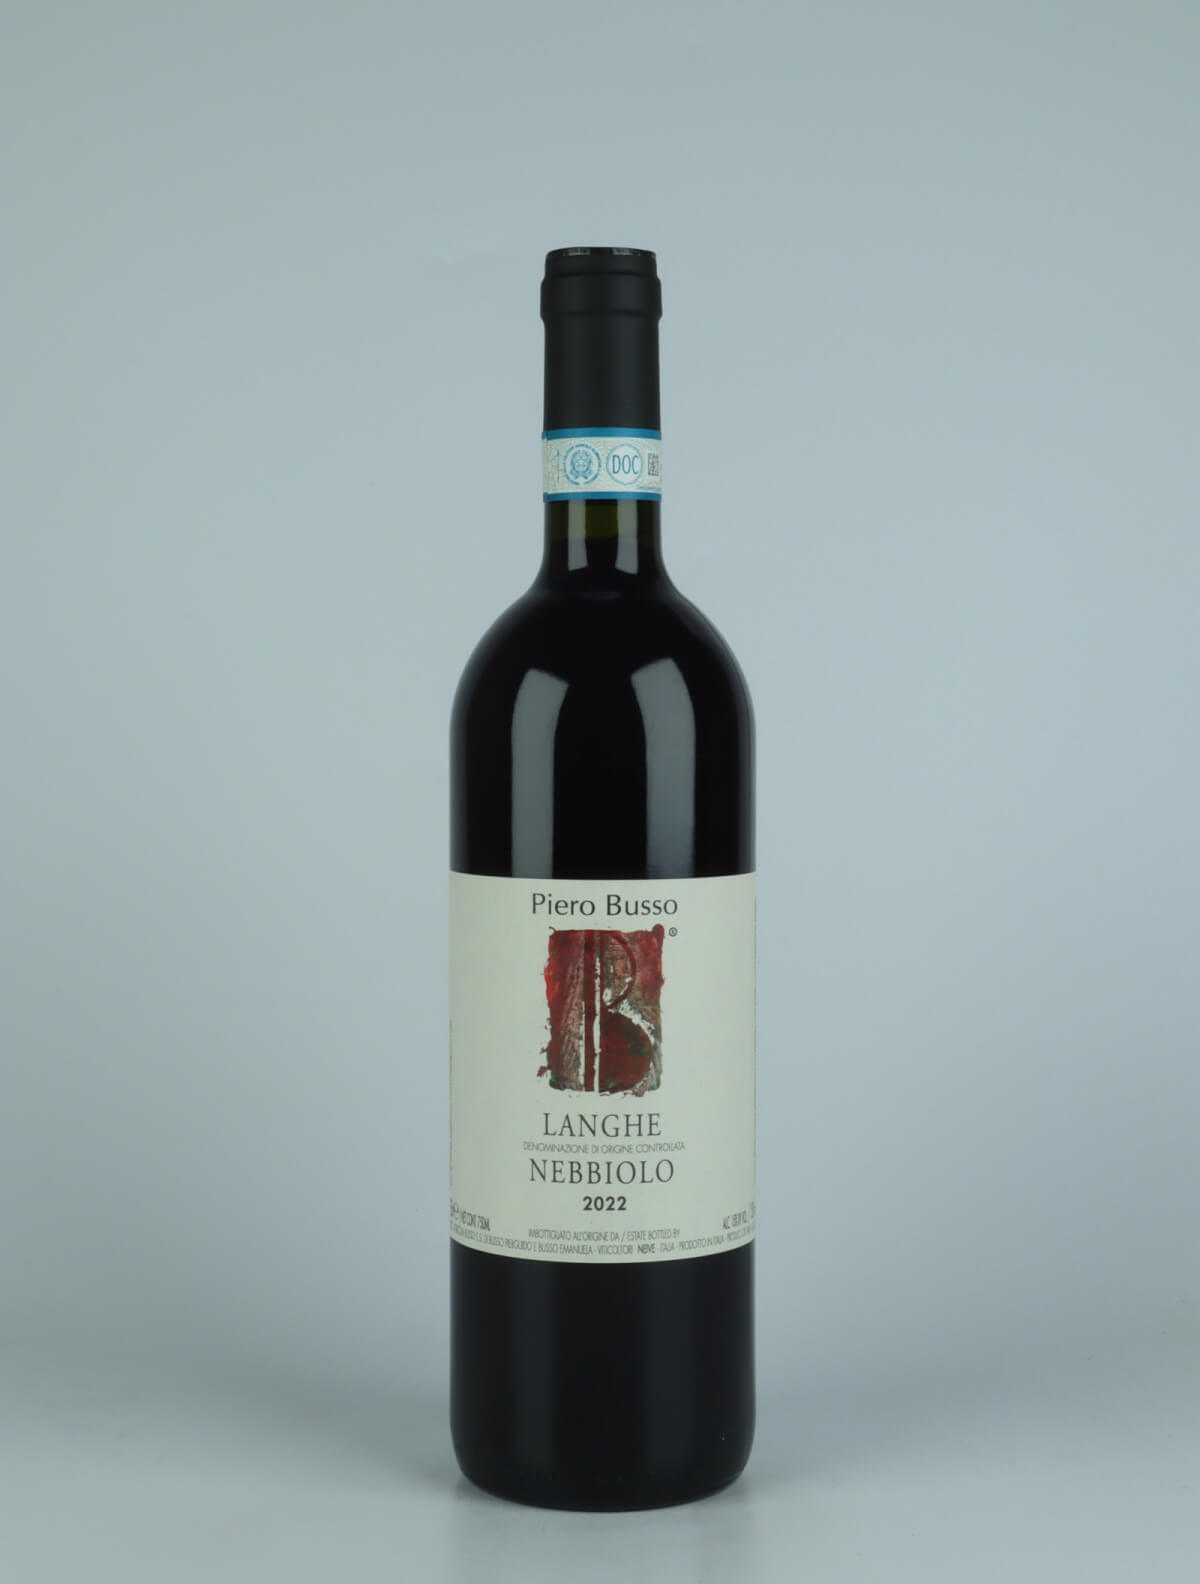 A bottle 2022 Langhe Nebbiolo Red wine from Piero Busso, Piedmont in Italy